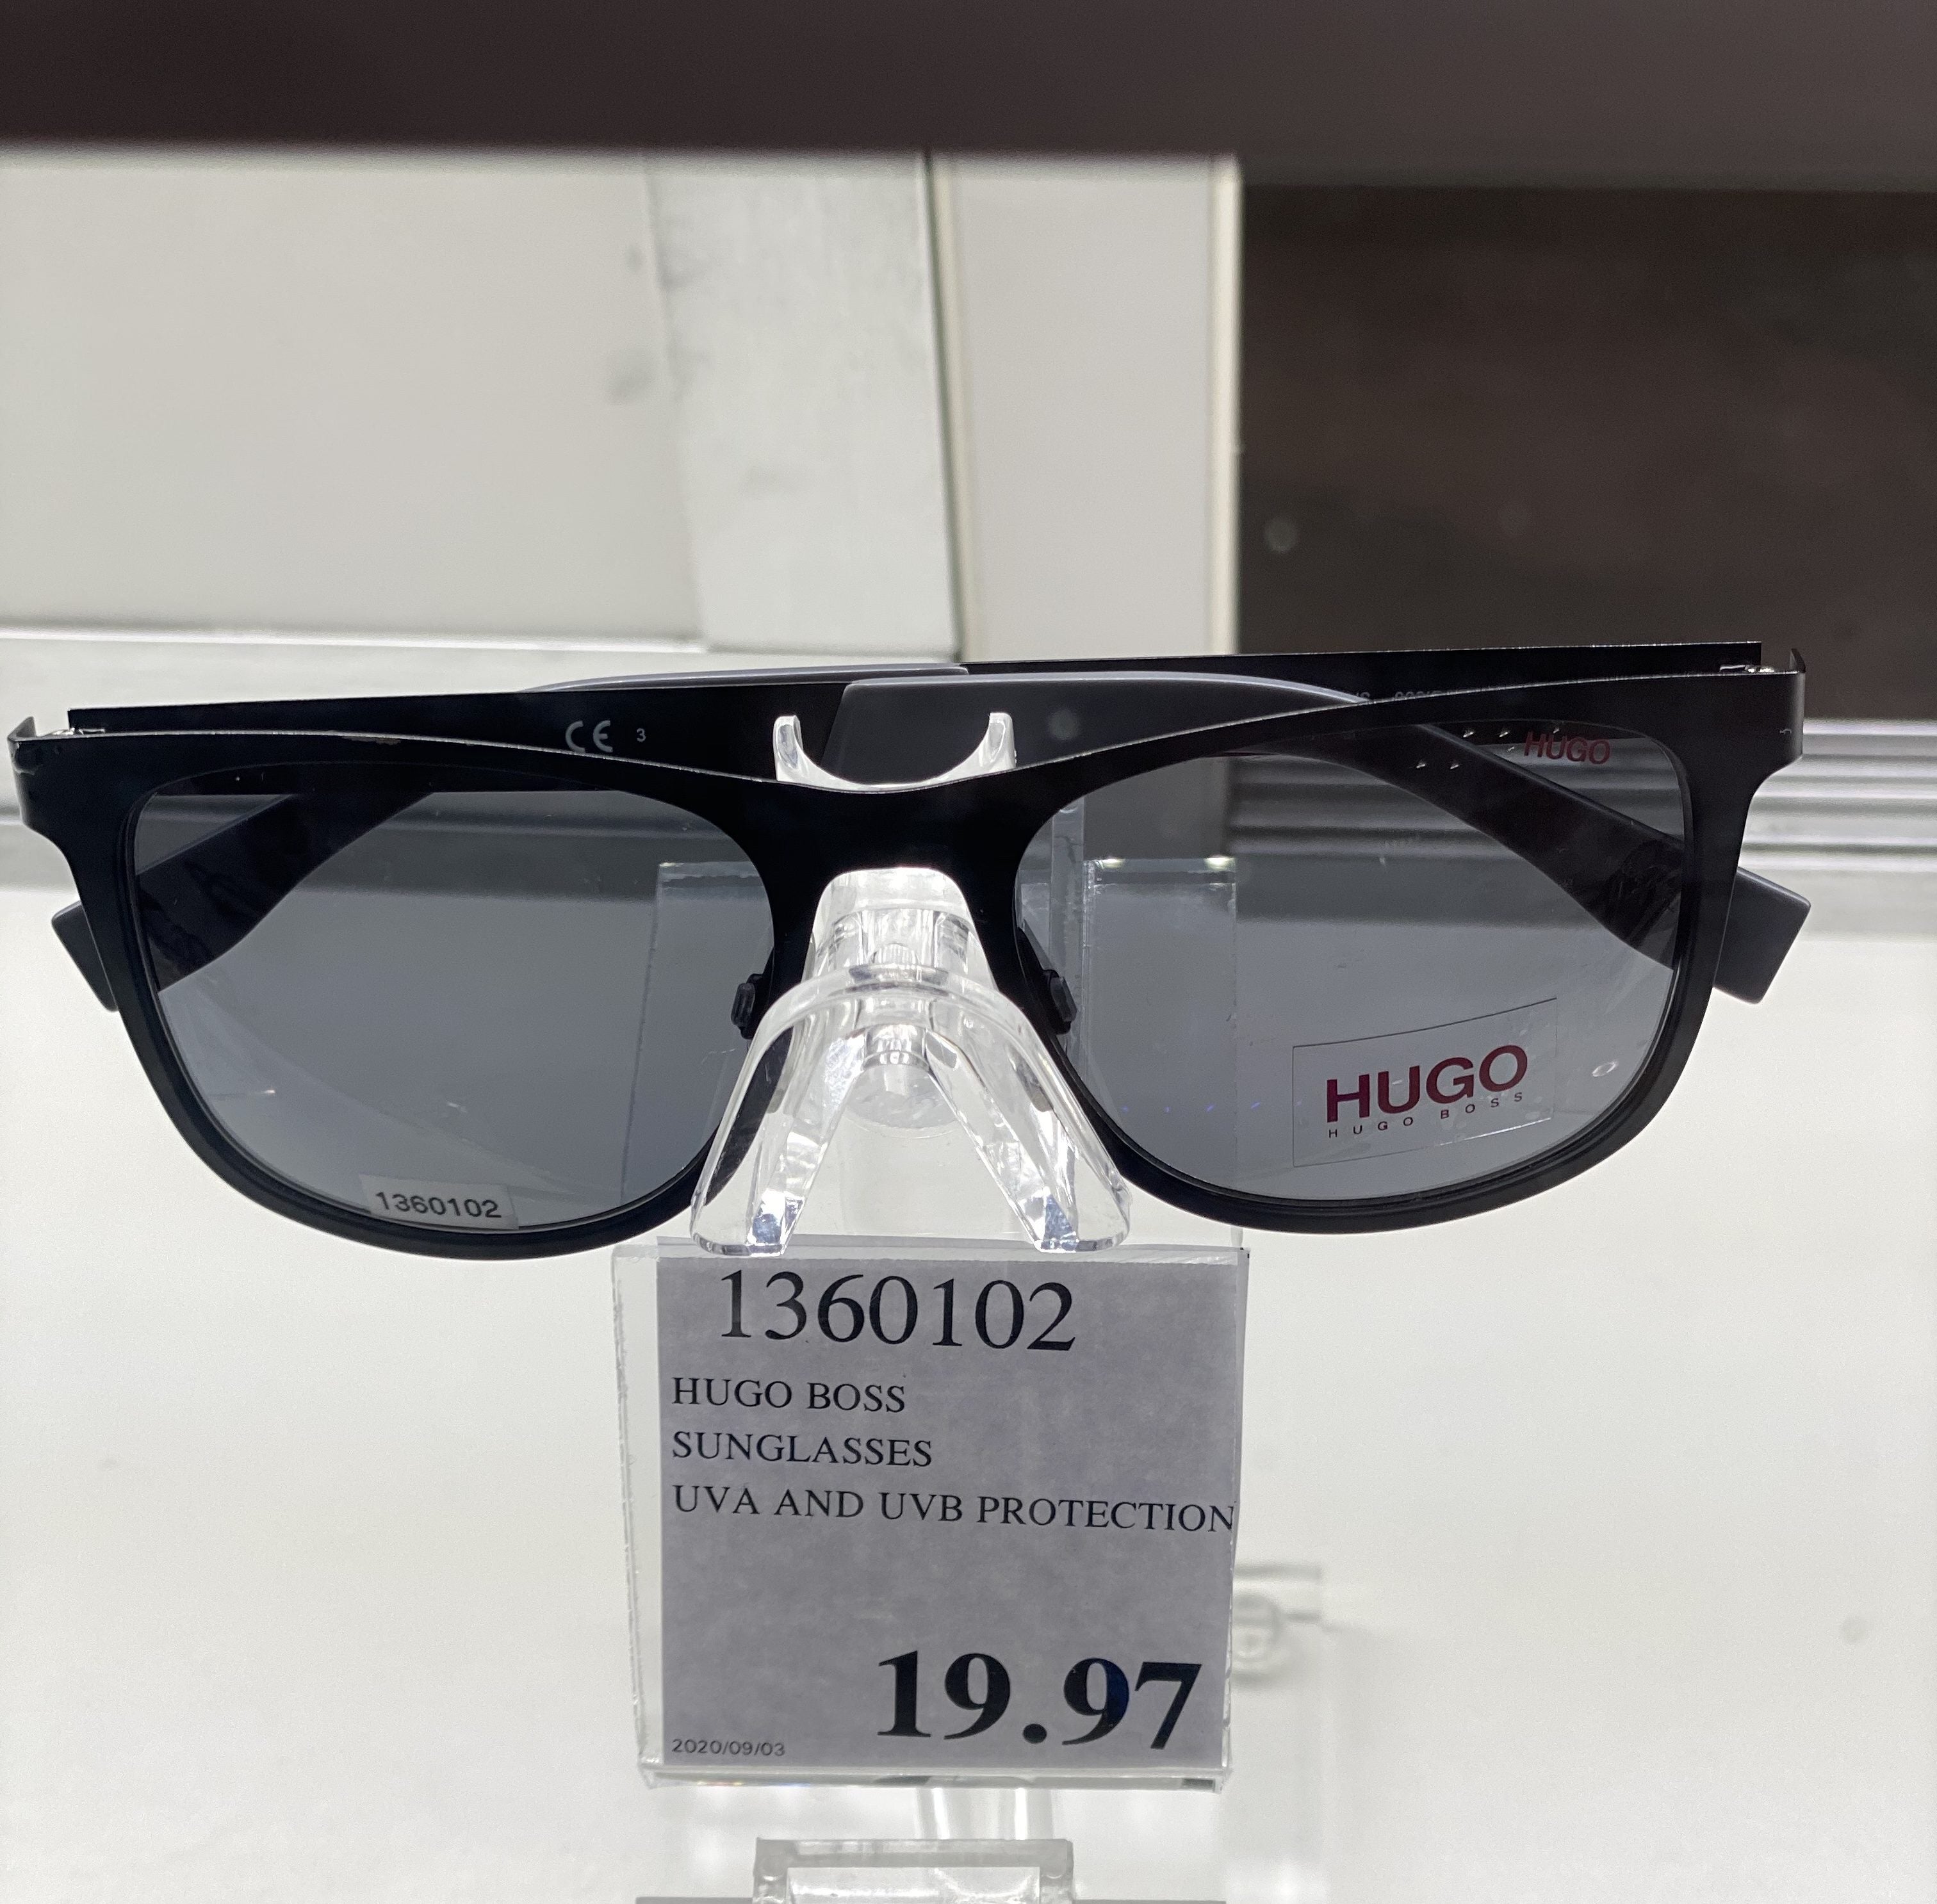 Costco] Hugo Boss Sunglasses - $19.97 